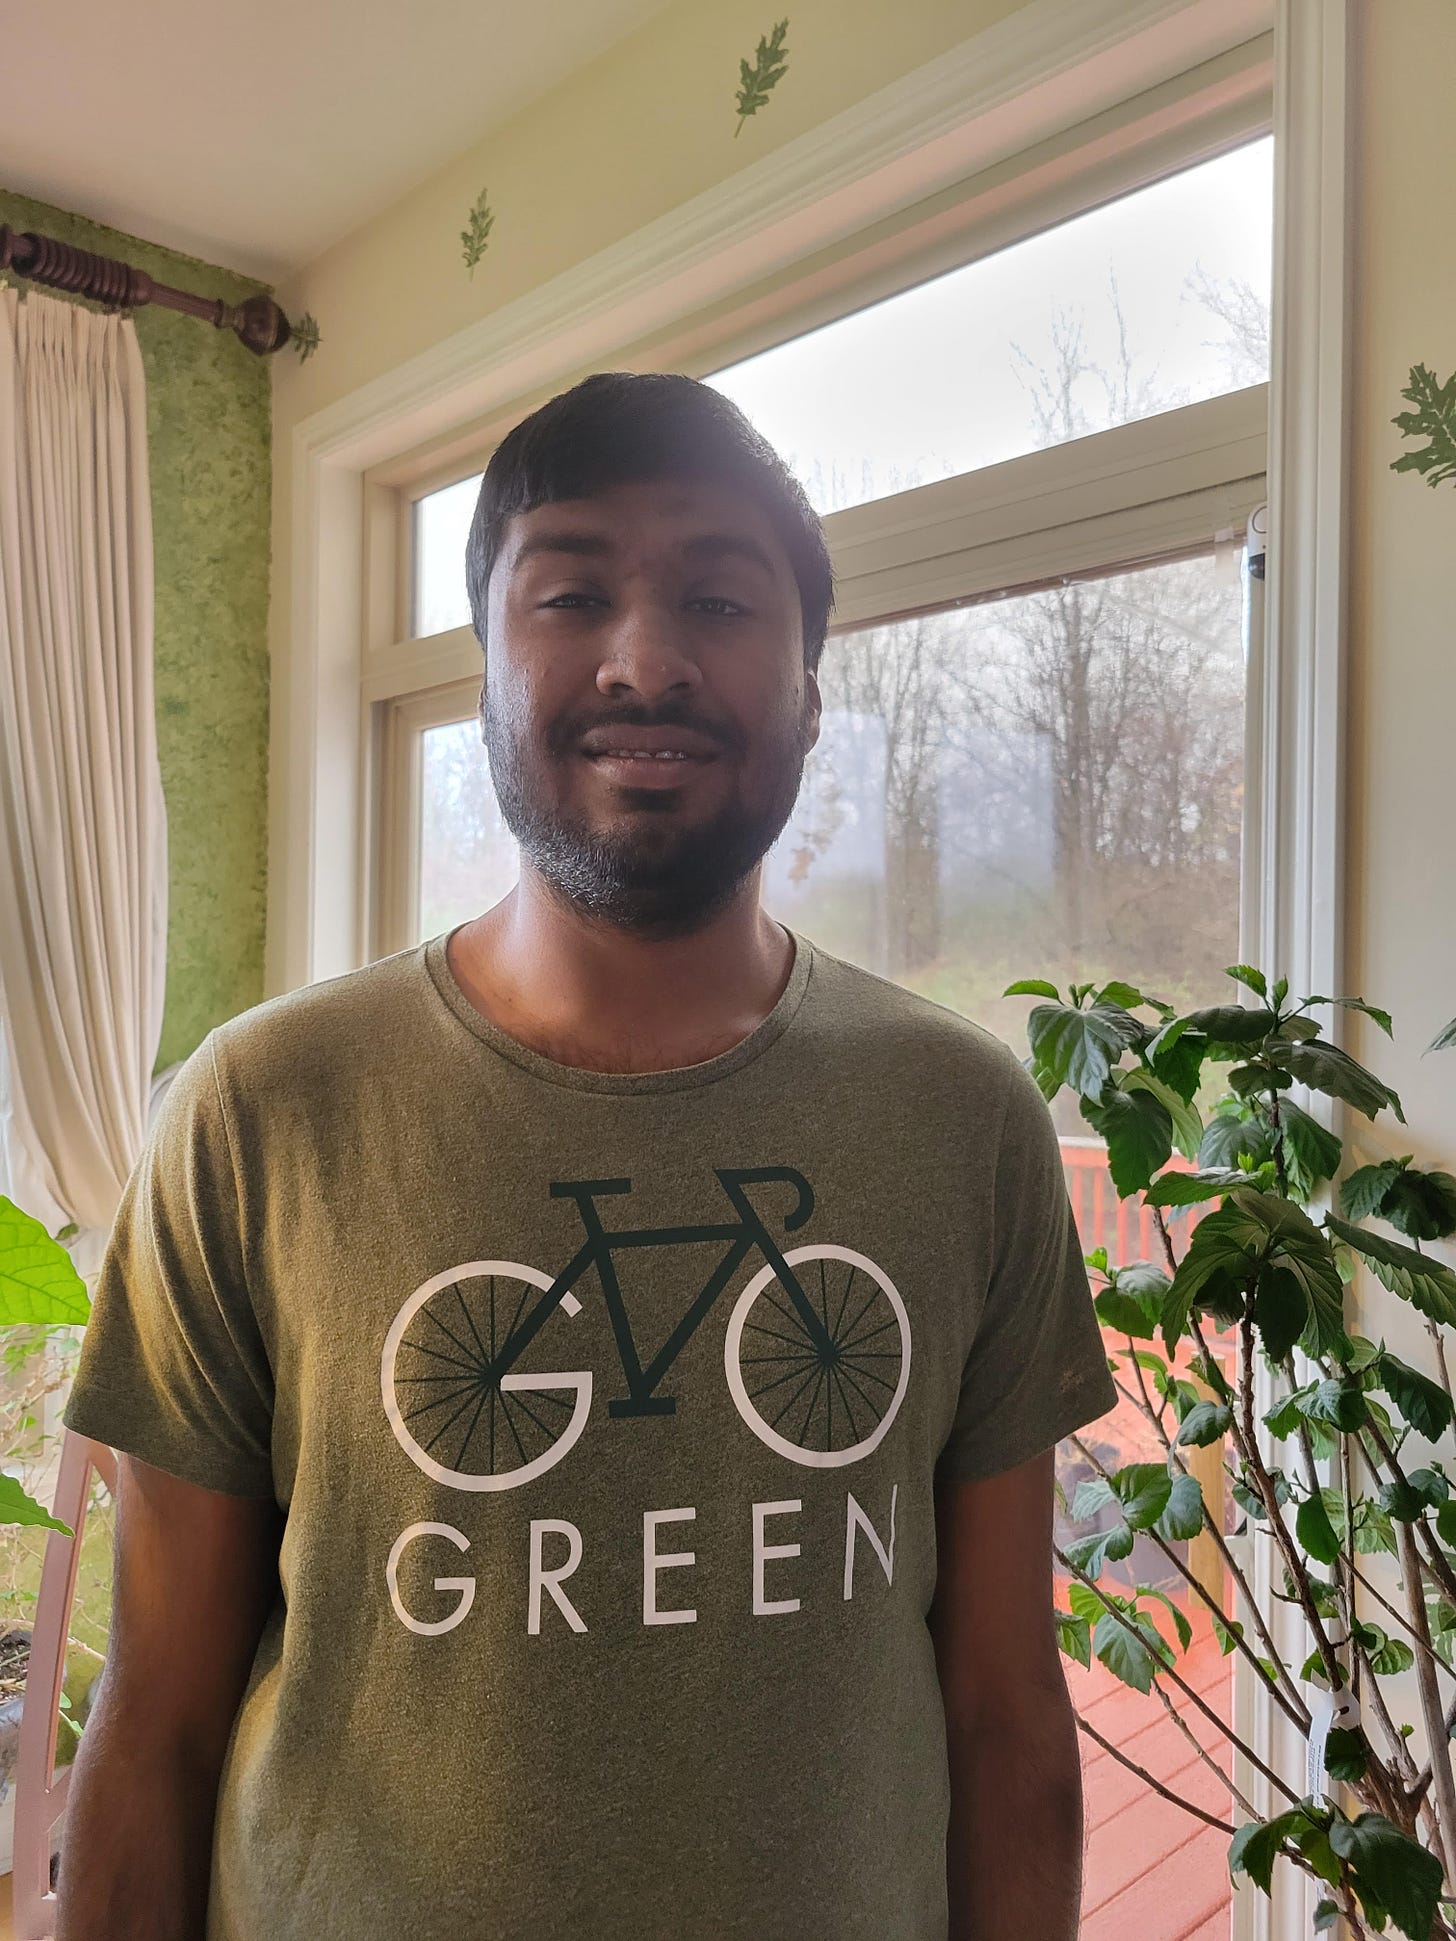 Kashi Krishnan appears before a window in a close-cut beard and a green shirt that says go green. 